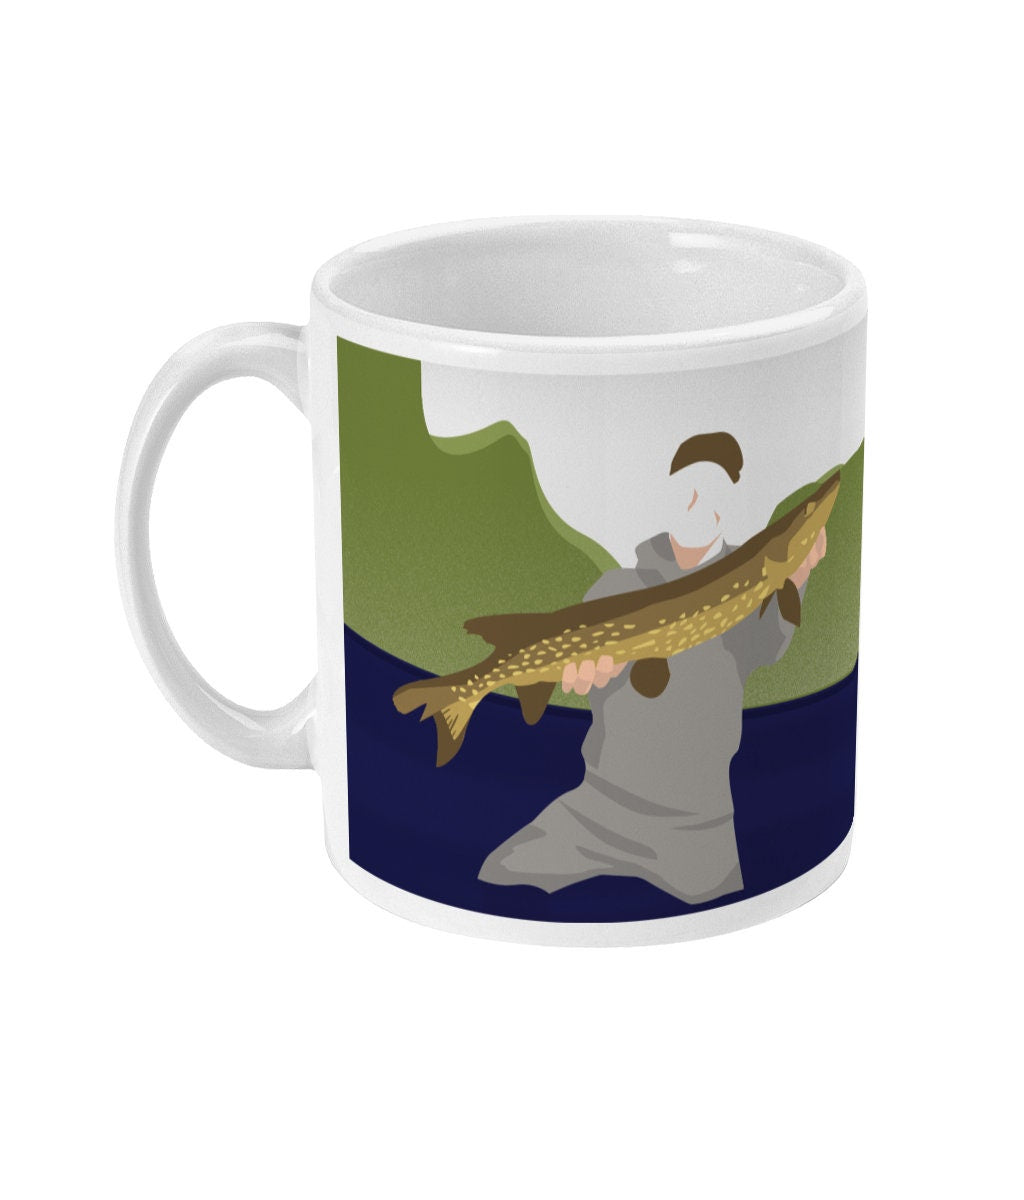 Fishing cup or mug "Antoine the fisherman" - Customizable